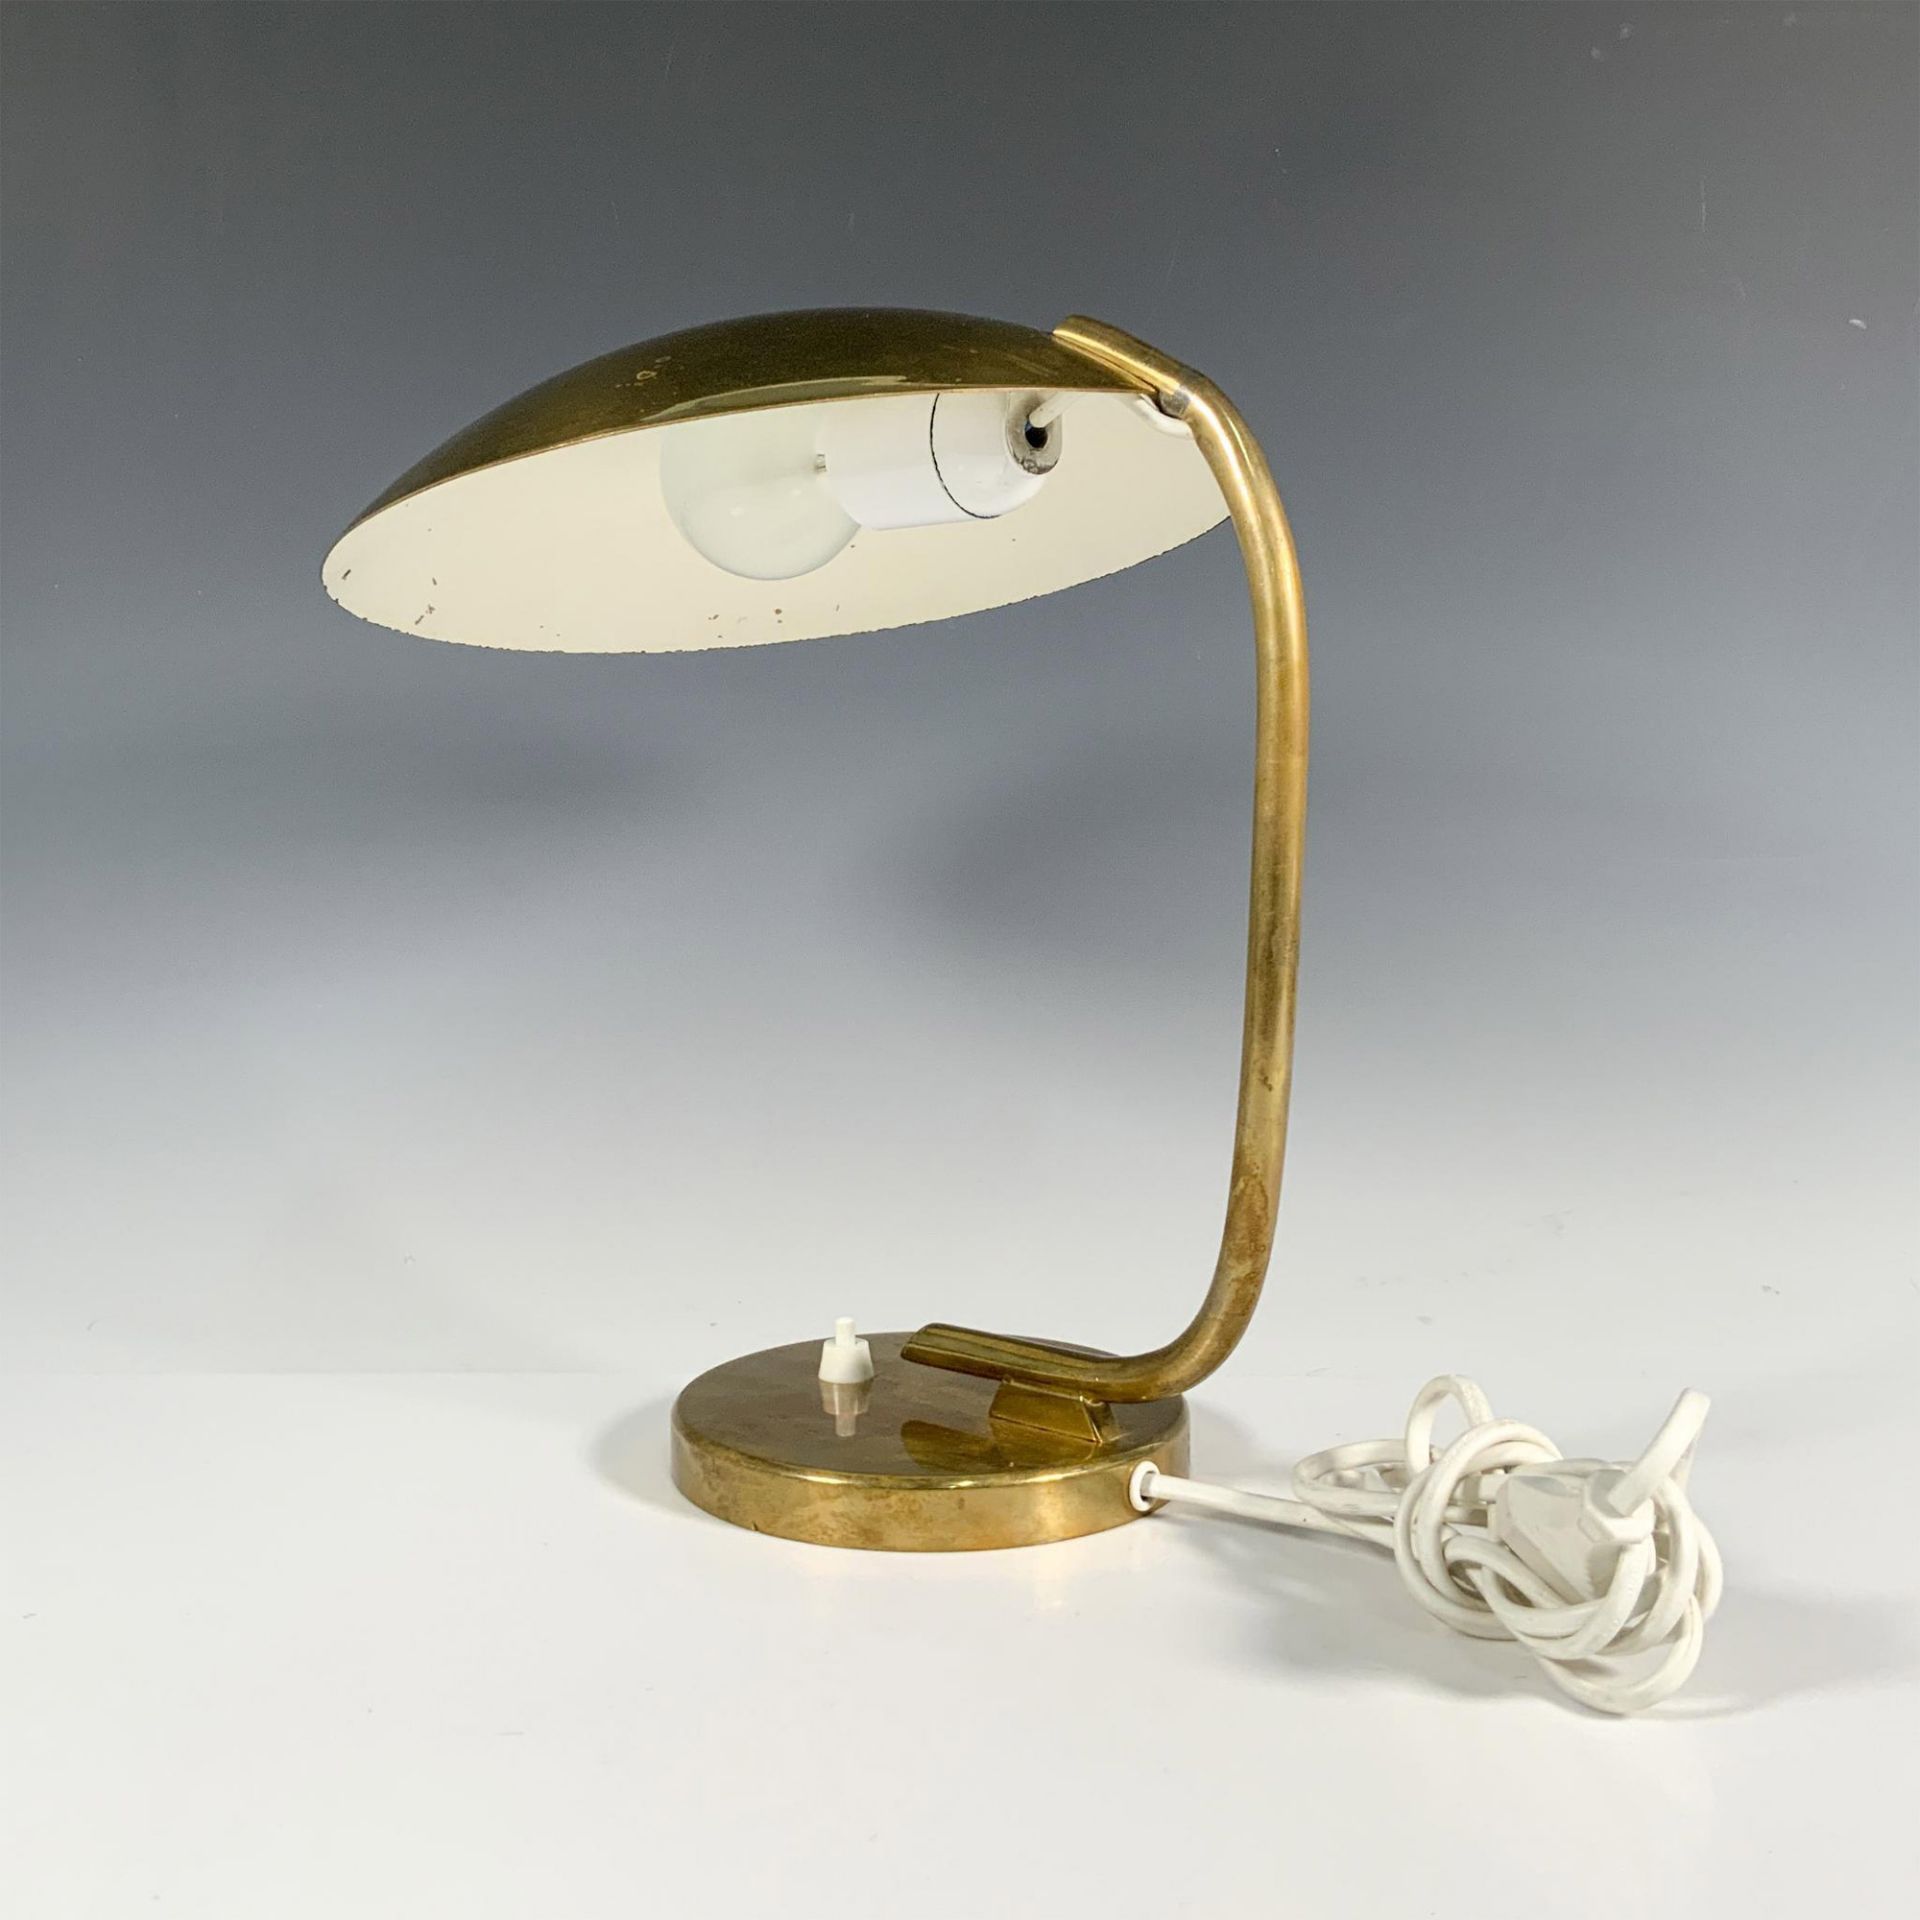 Itsu Made Finnish Mid Century Modern Desk Lamp - Image 2 of 3